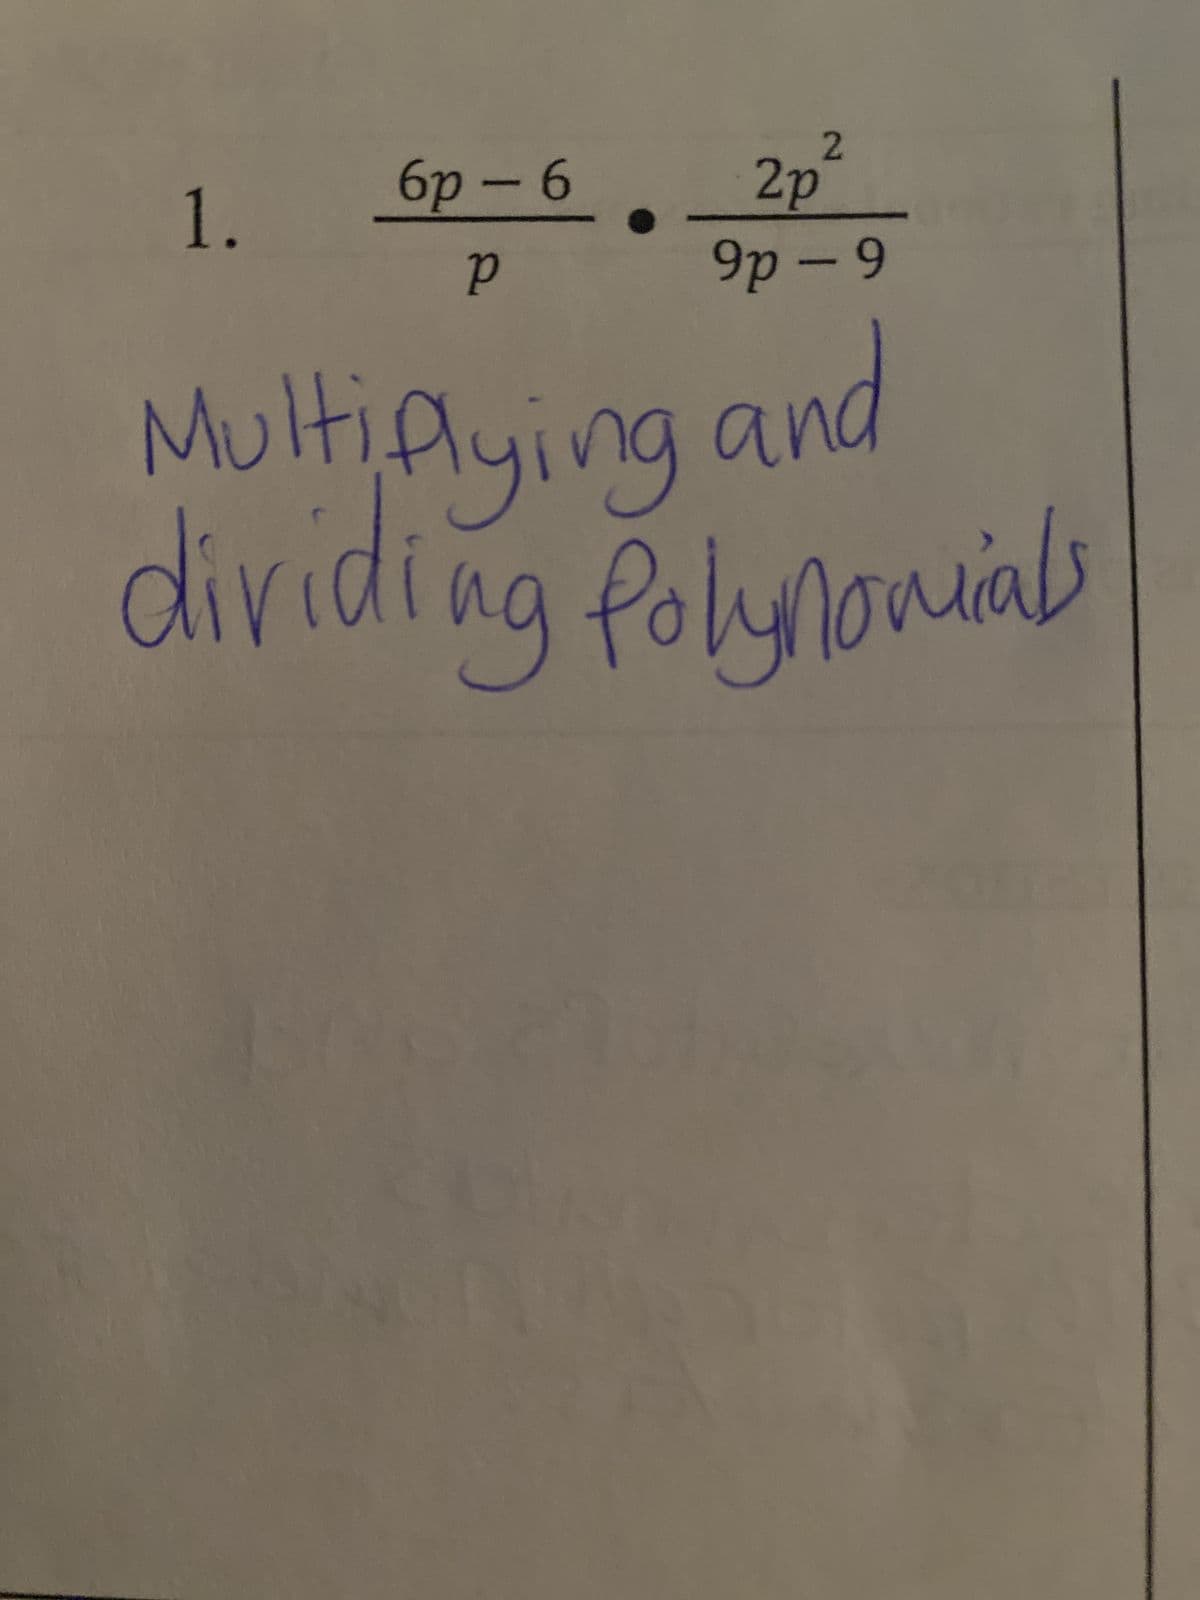 1.
6p-6
d
●
2
dz
9p - 9
Multiplying and
dividing Polynomials